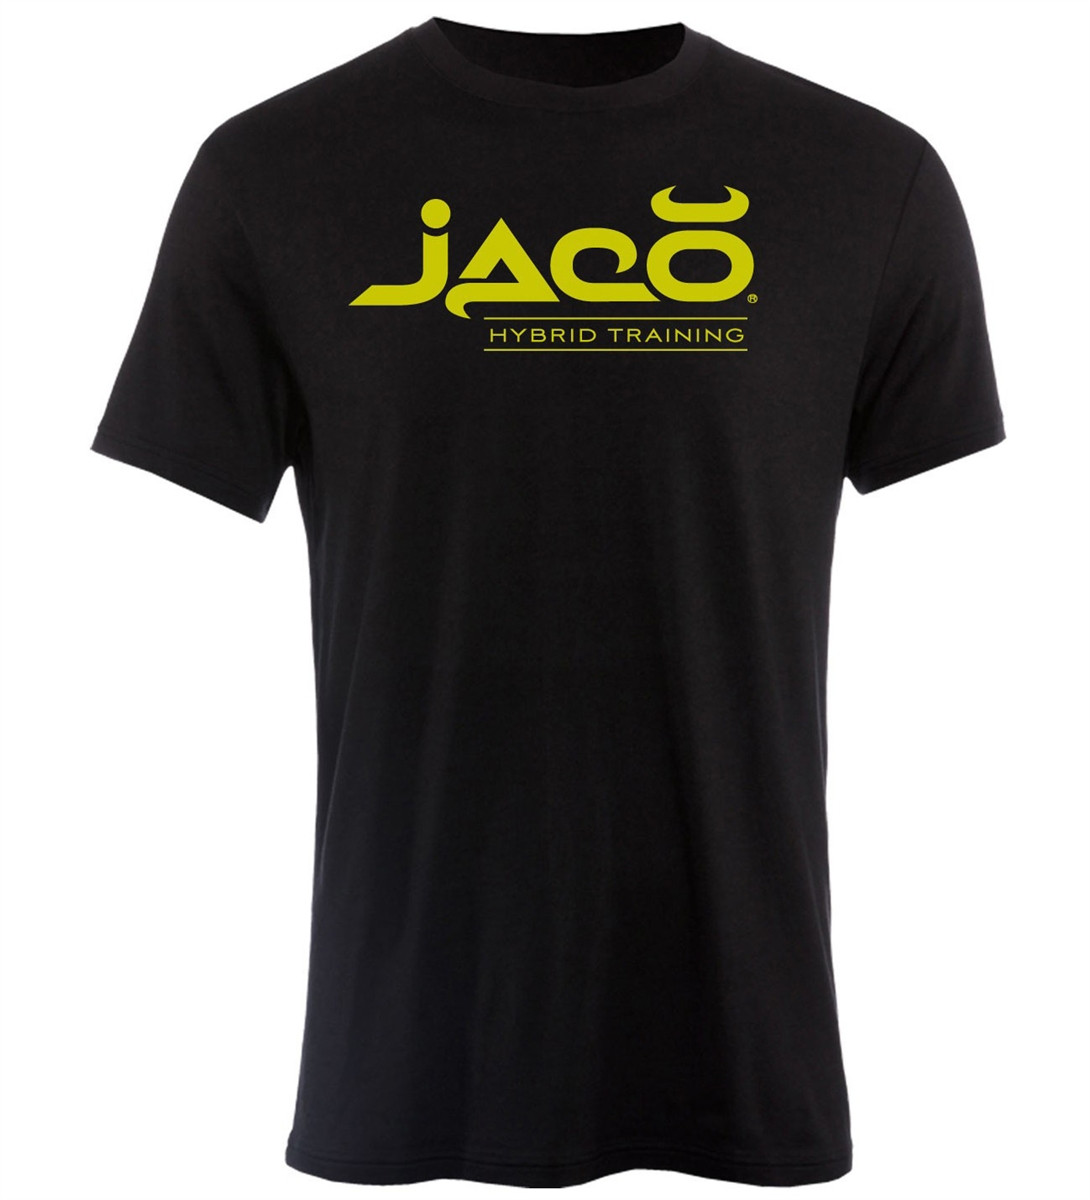 Jaco Athletics HT Crew Black/Suga Tshirt now available at www.thejiujitsushop.com

Enjoy Free Shipping from The Jiu Jitsu Shop Today!